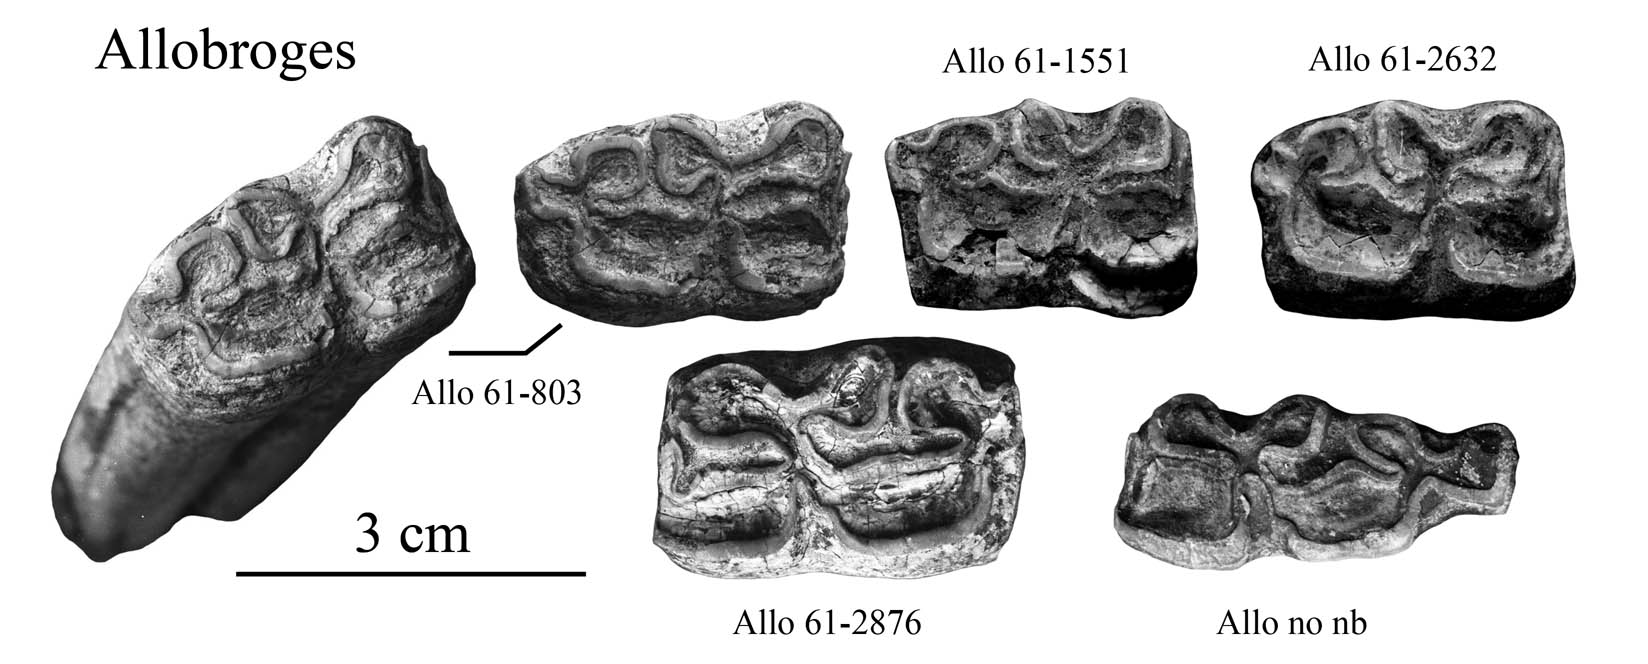 Fig.1 Allobroges, E. algericus, Lower cheek teeth